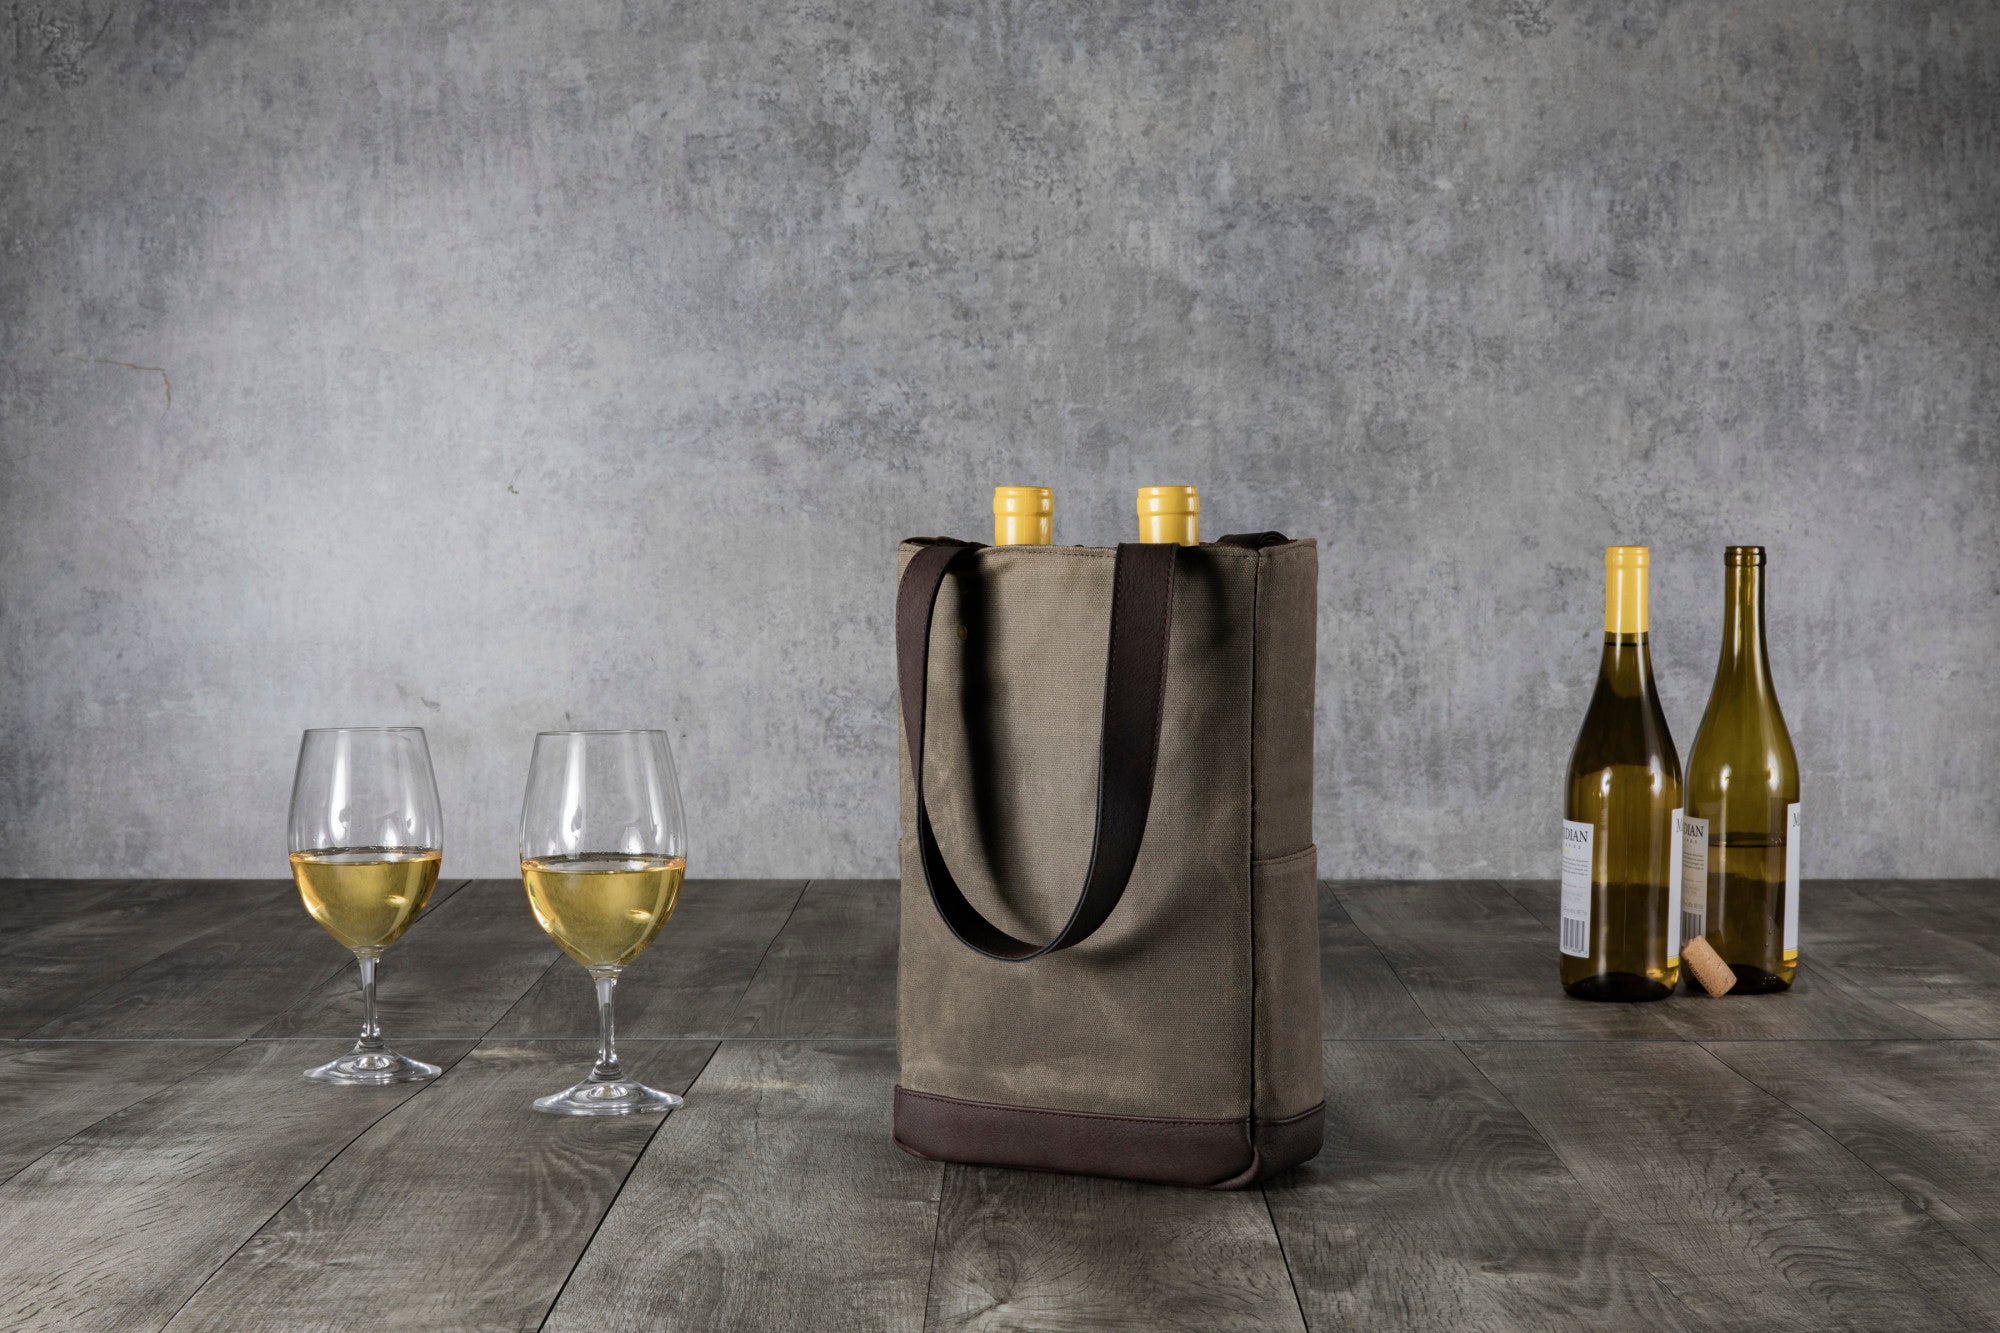 Kansas City Royals - 2 Bottle Insulated Wine Cooler Bag